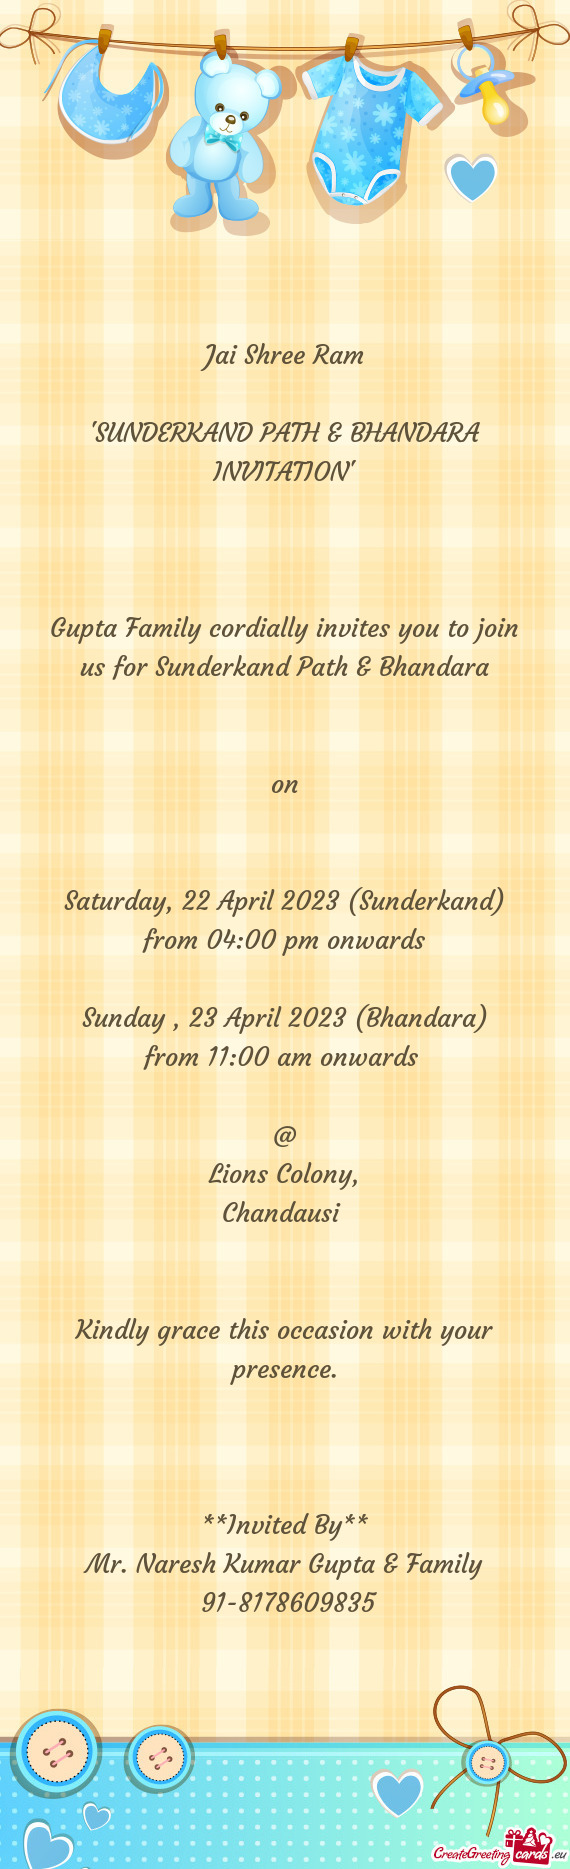 "SUNDERKAND PATH & BHANDARA INVITATION"